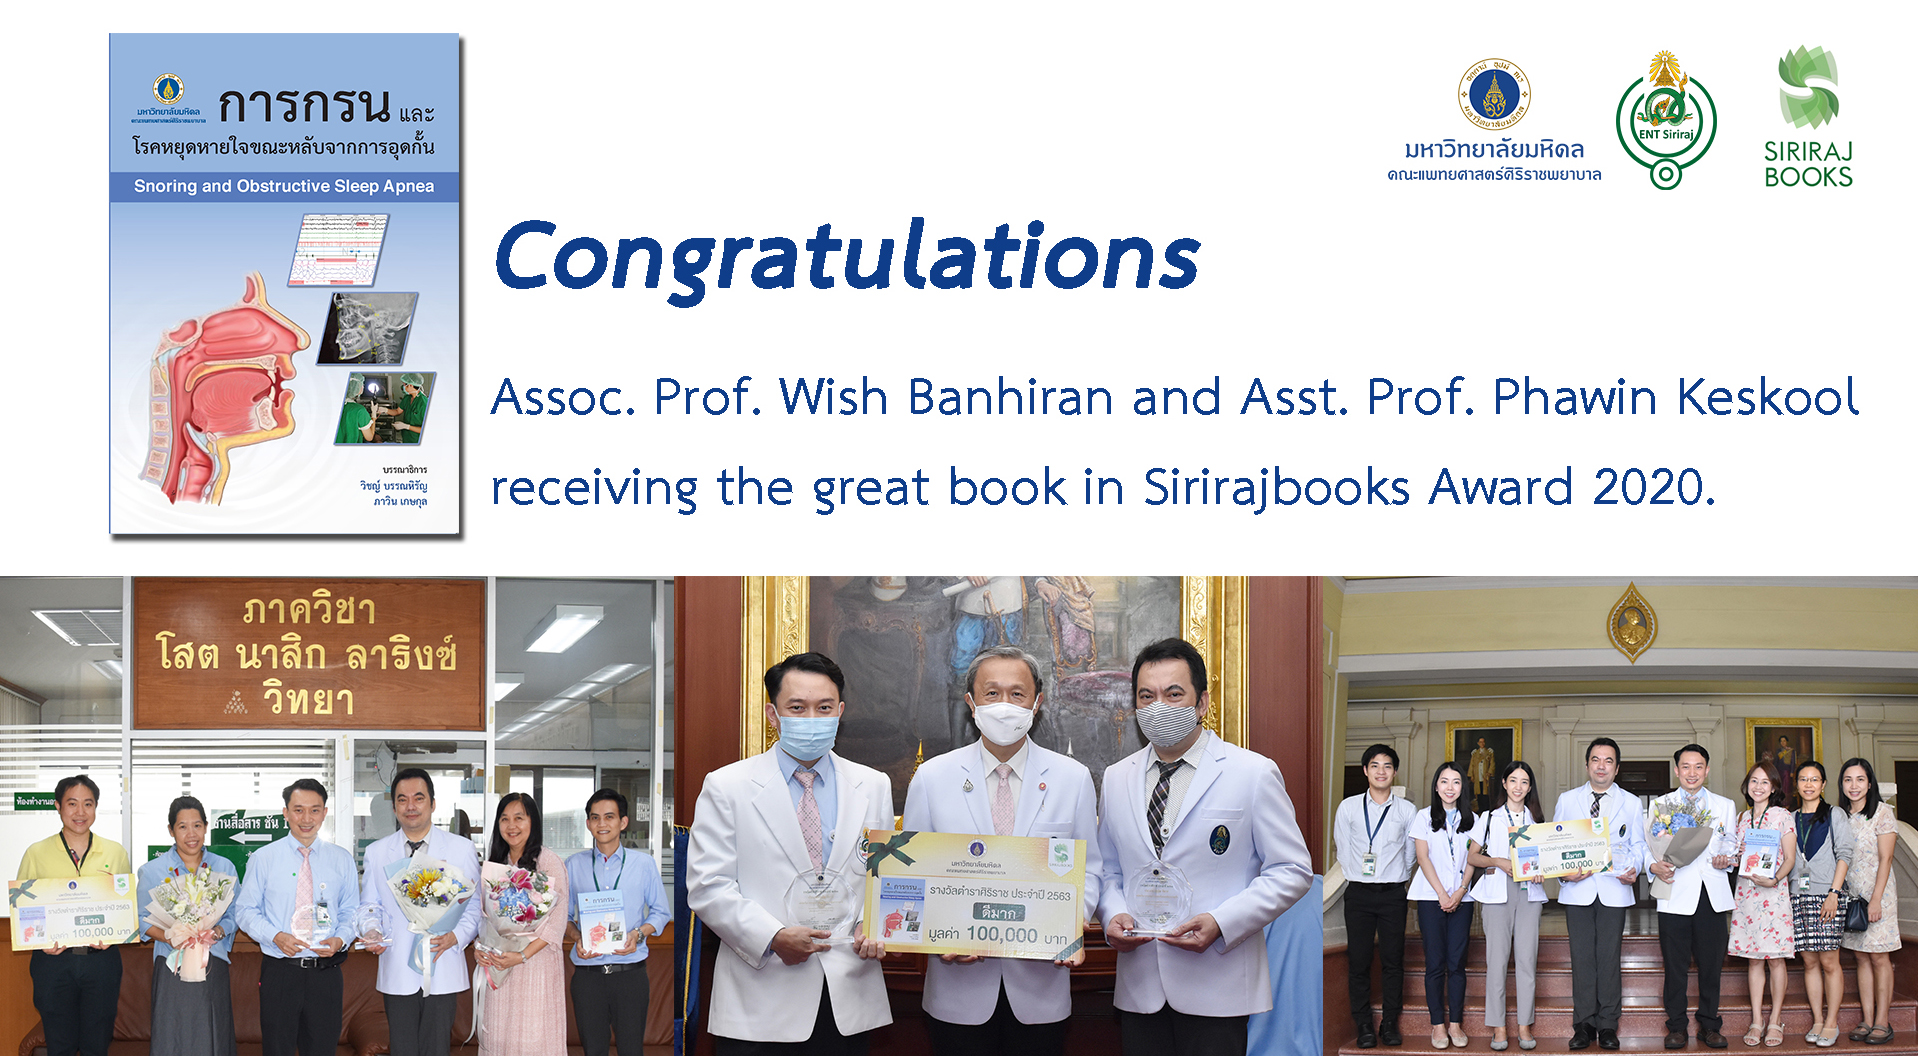 Congratulations to Assoc. Prof. Wish Banhiran and Asst. Prof. Phawin Keskool on receiving the great book in Sirirajbooks Award 2020.